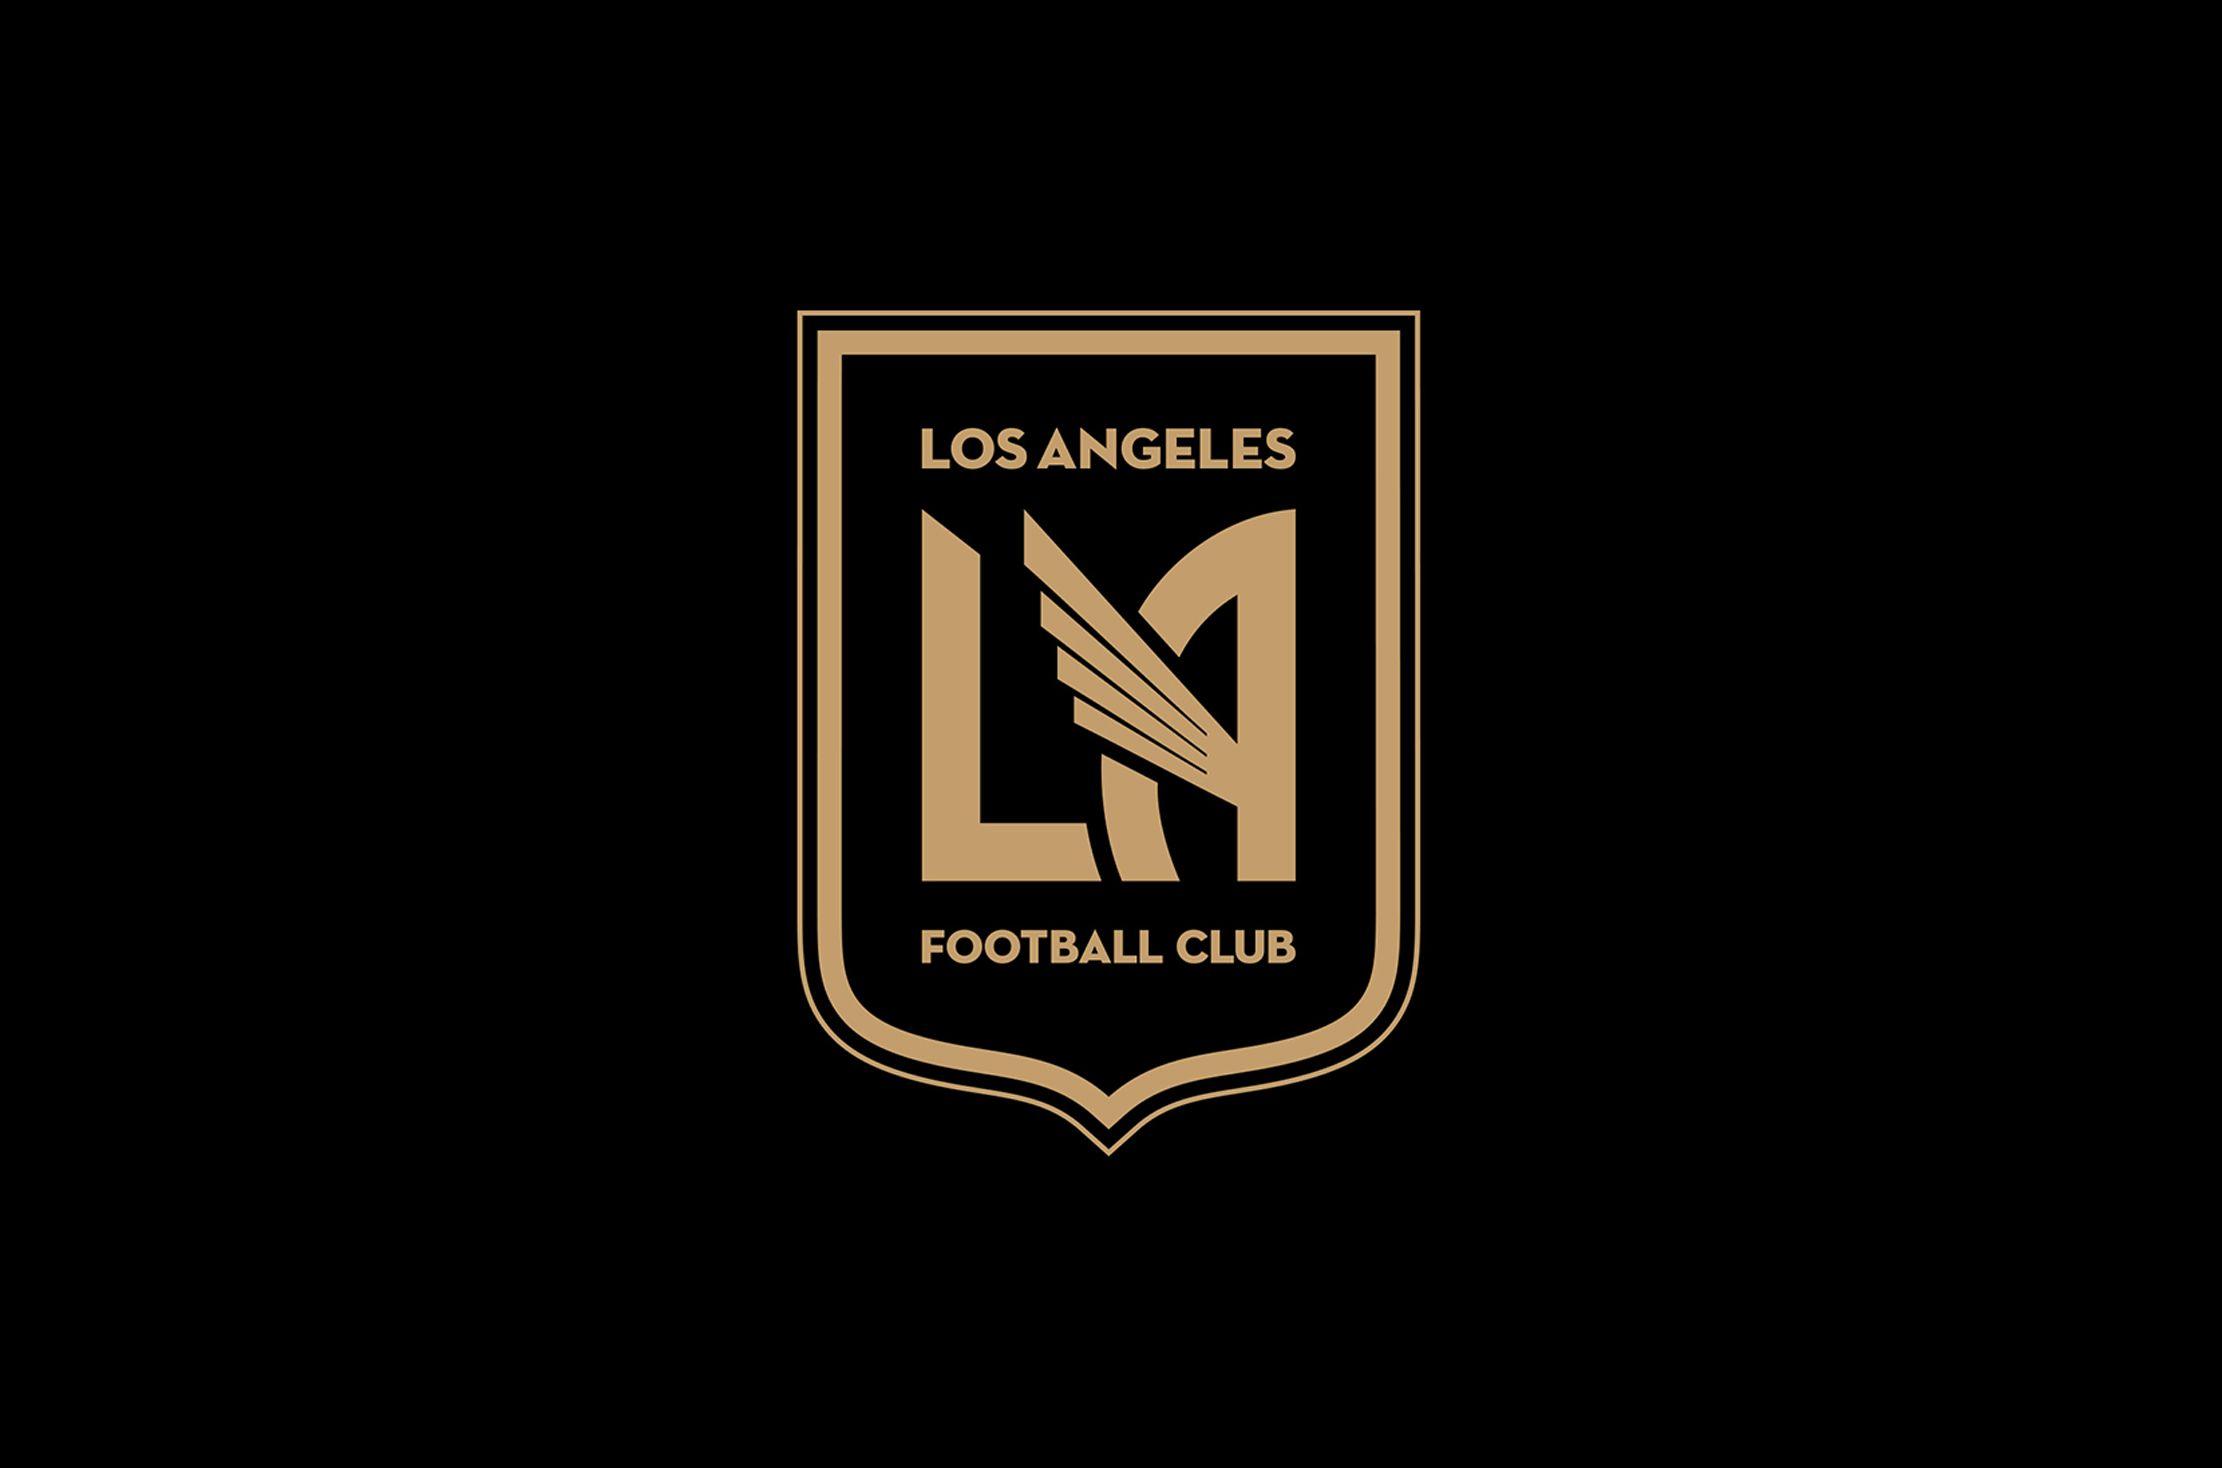 La Logo - A Logo Design from Scratch: The L.A. Soccer Team's Mark - HOW Design